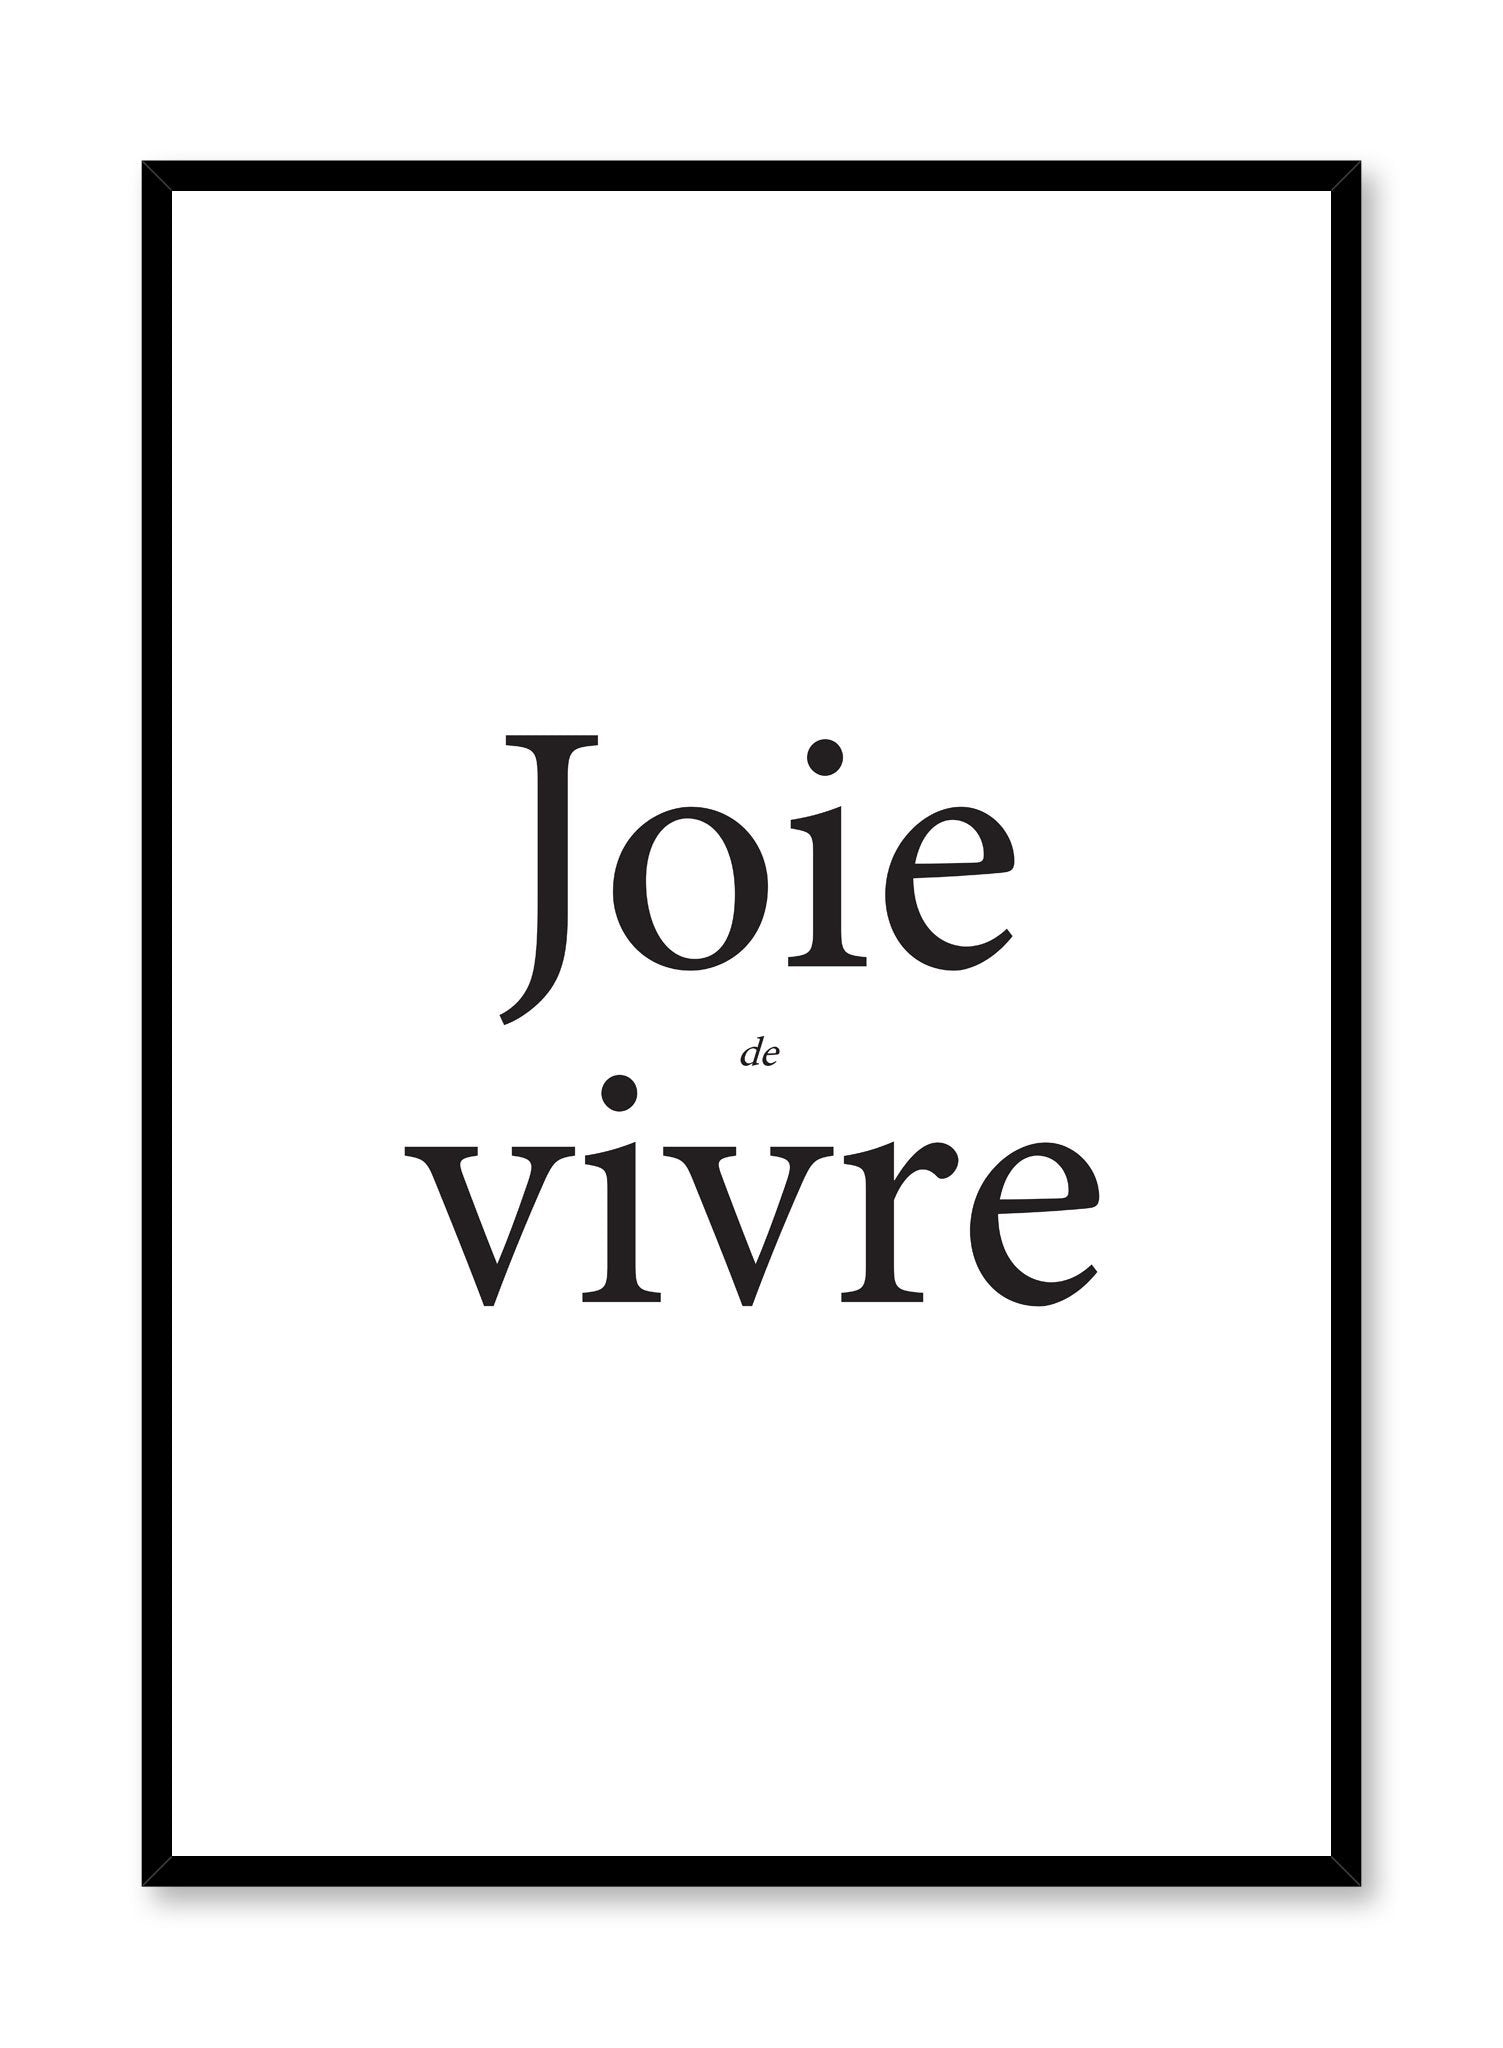 Joie de vivre modern minimalist typography art print by Opposite Wall